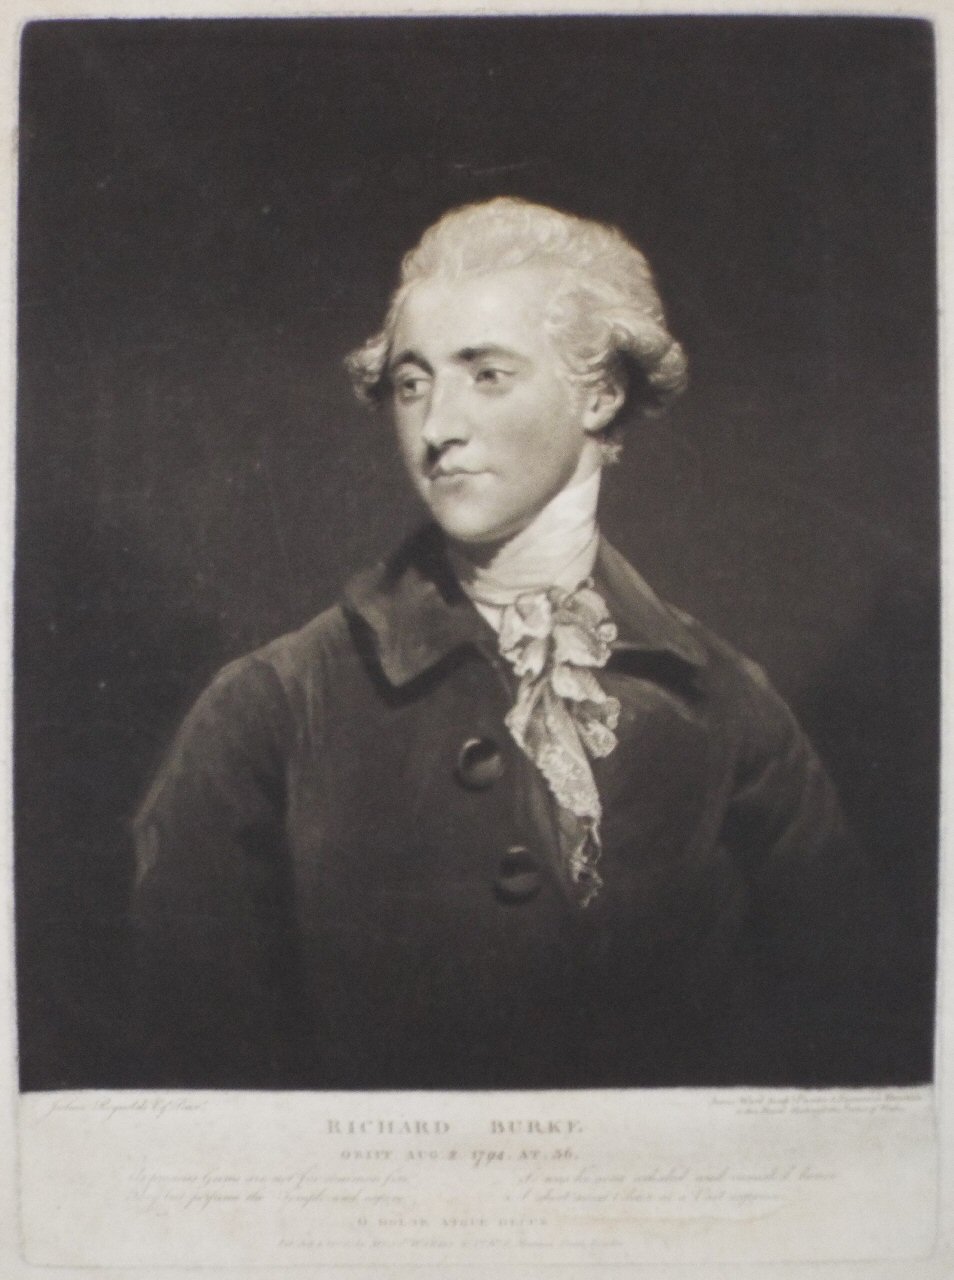 Mezzotint - Richard Burke Obiit. Aug . 2 . 1794 . at . 36. - Ward